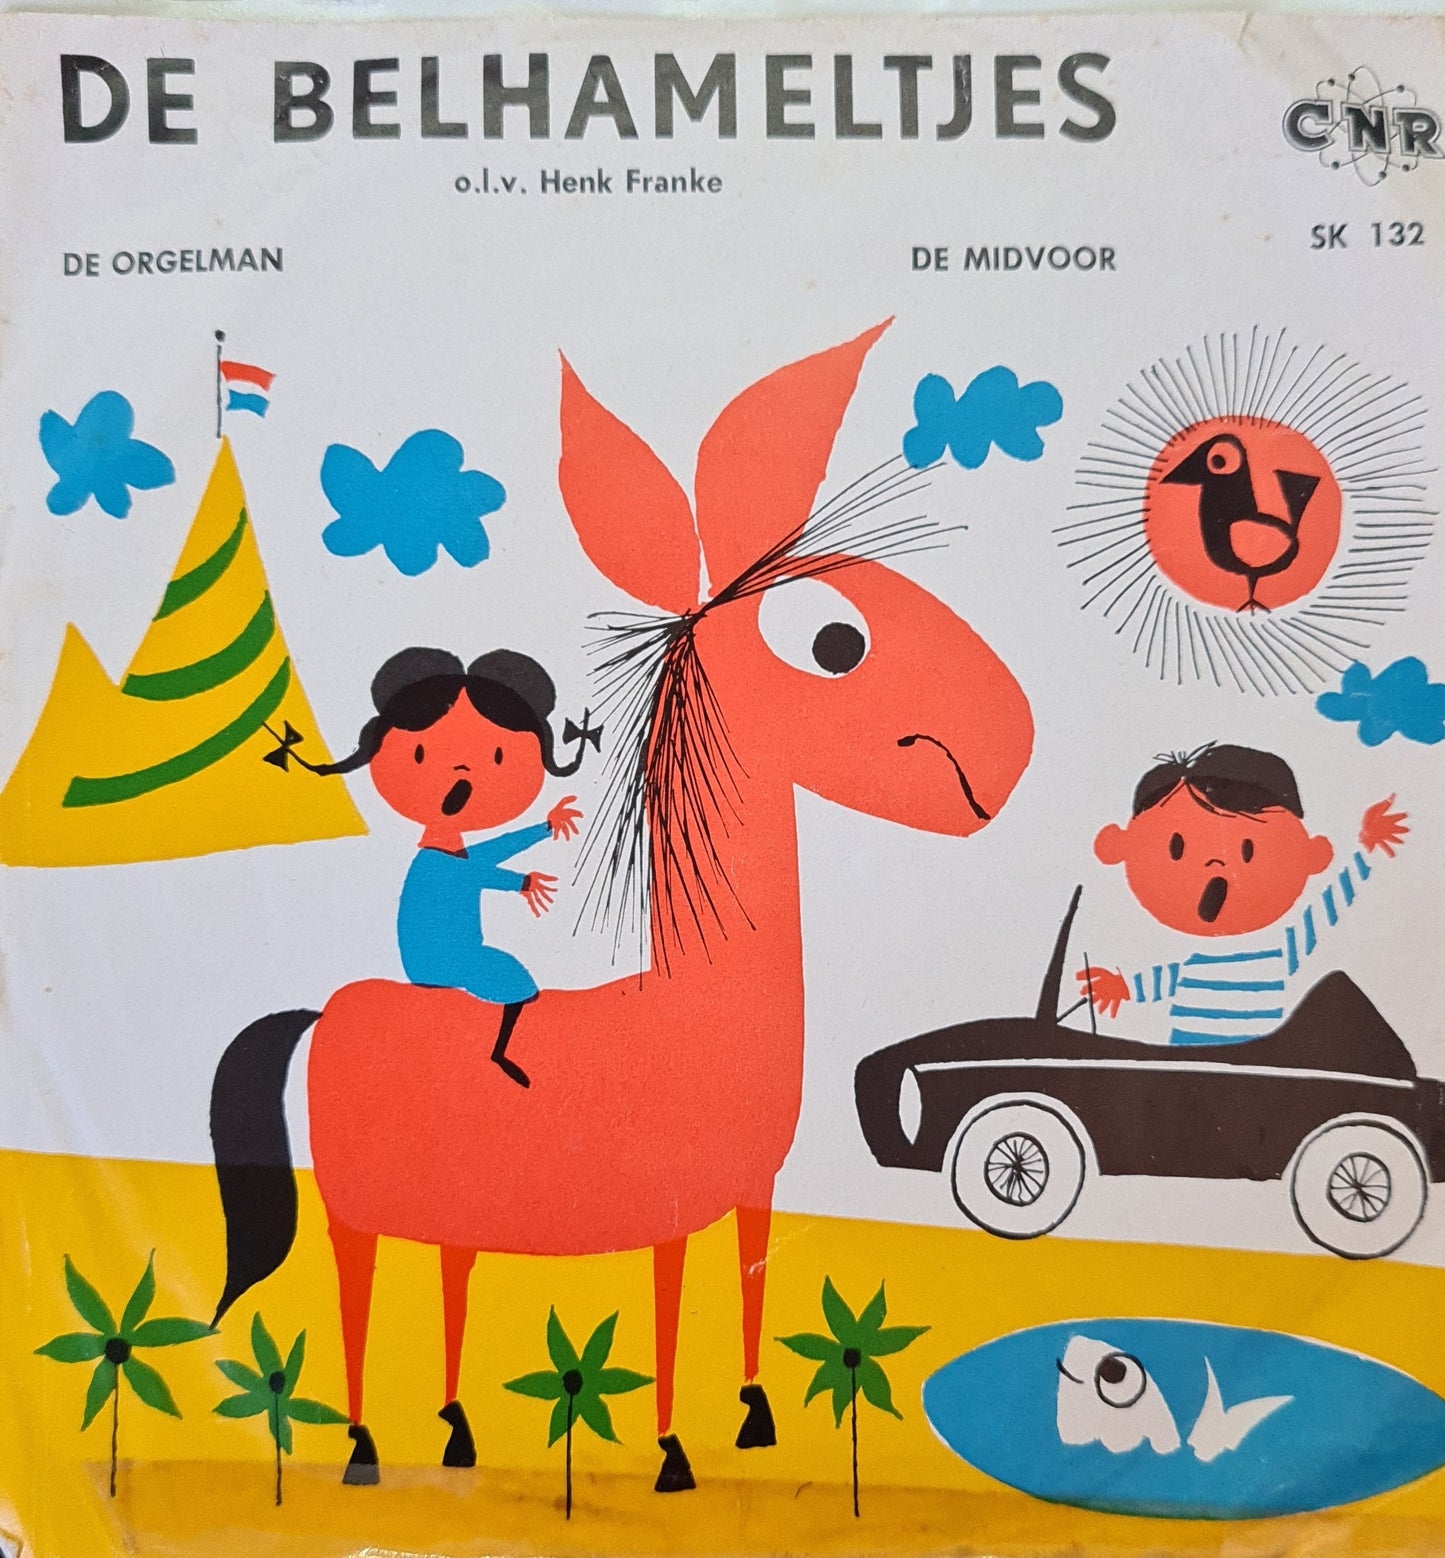 Belhameltjes - De Orgelman Vinyl Singles VINYLSINGLES.NL